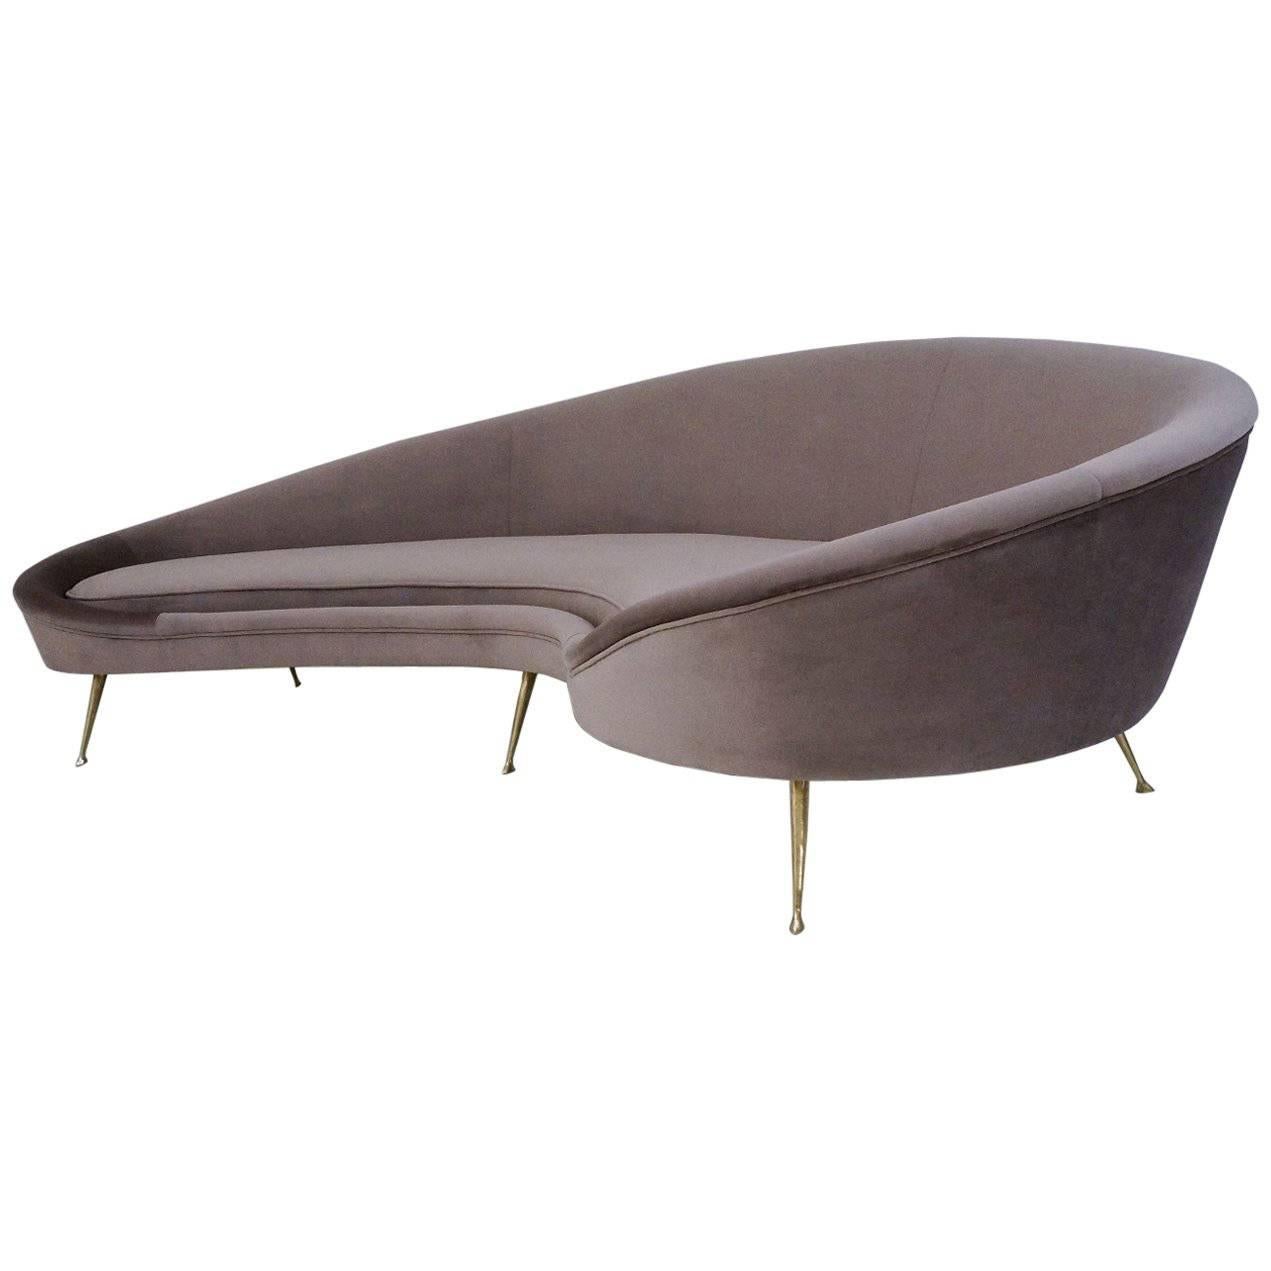 Ico Parisi Sofa 1950s Style in New Velvet Upholstery, Italian For Sale